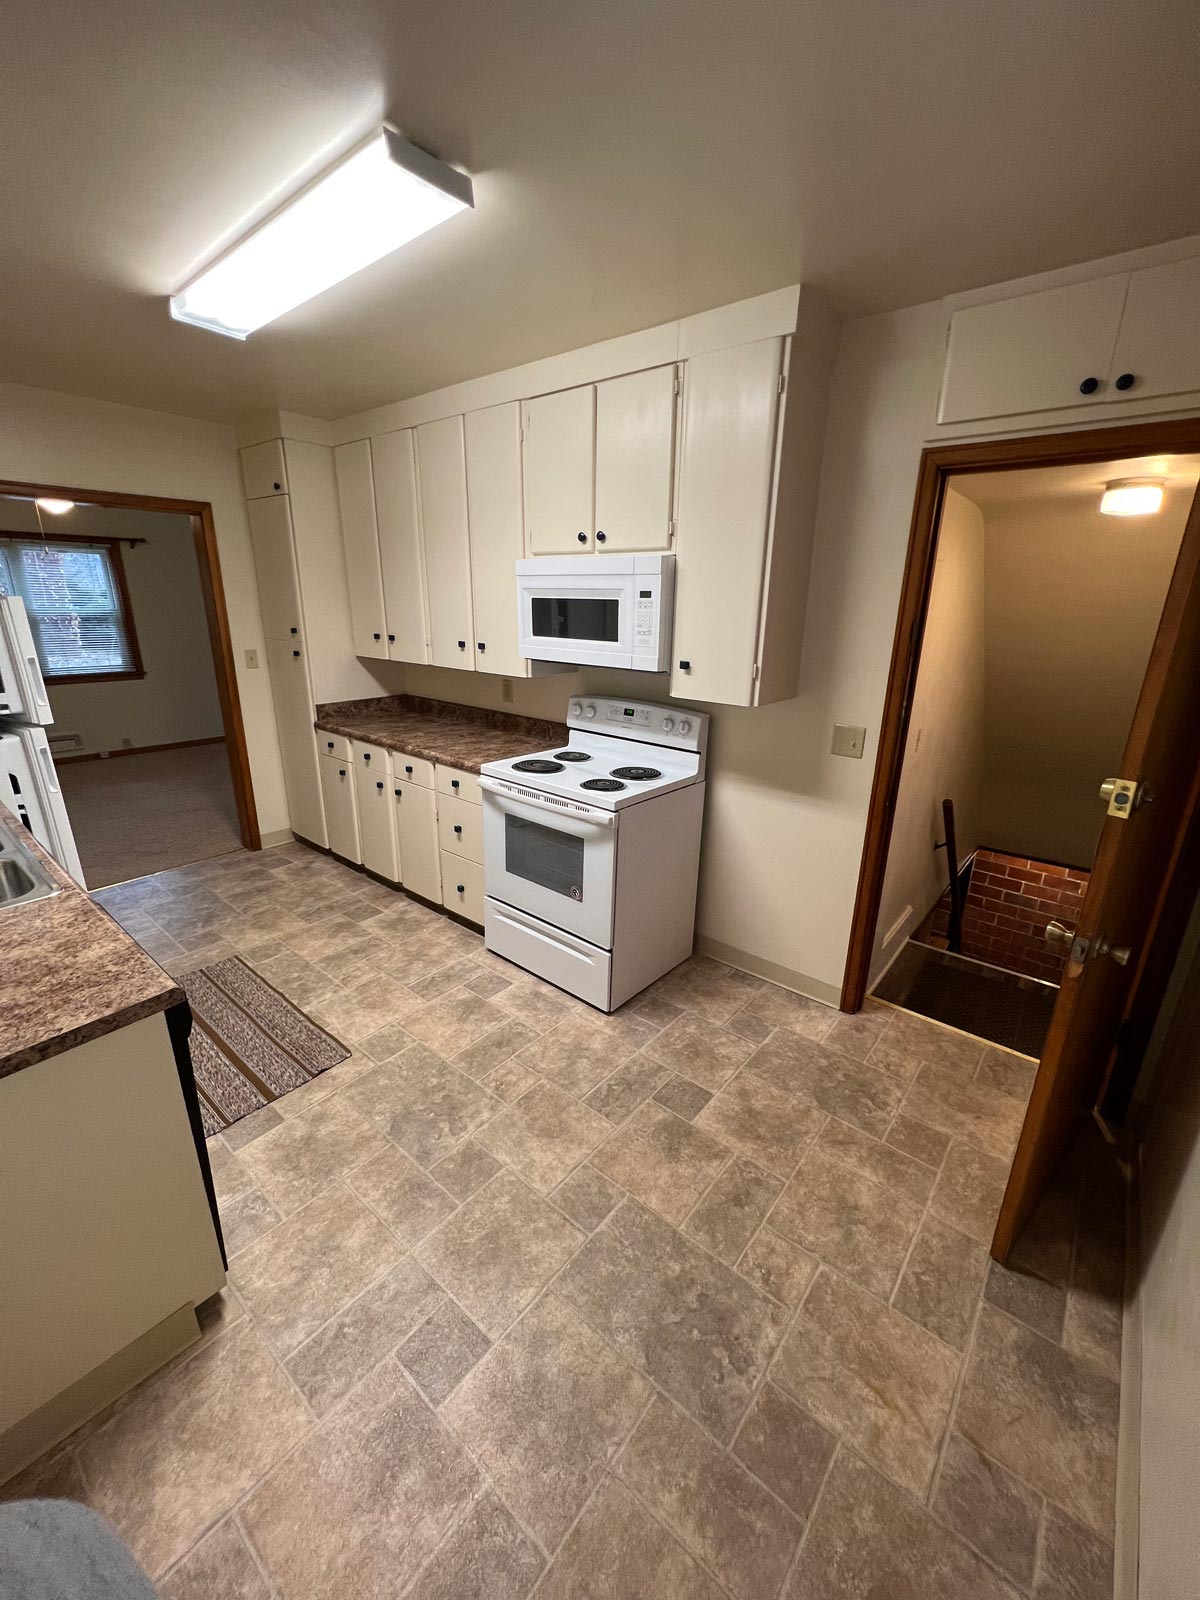 539 59th street apartment Interior - kitchen